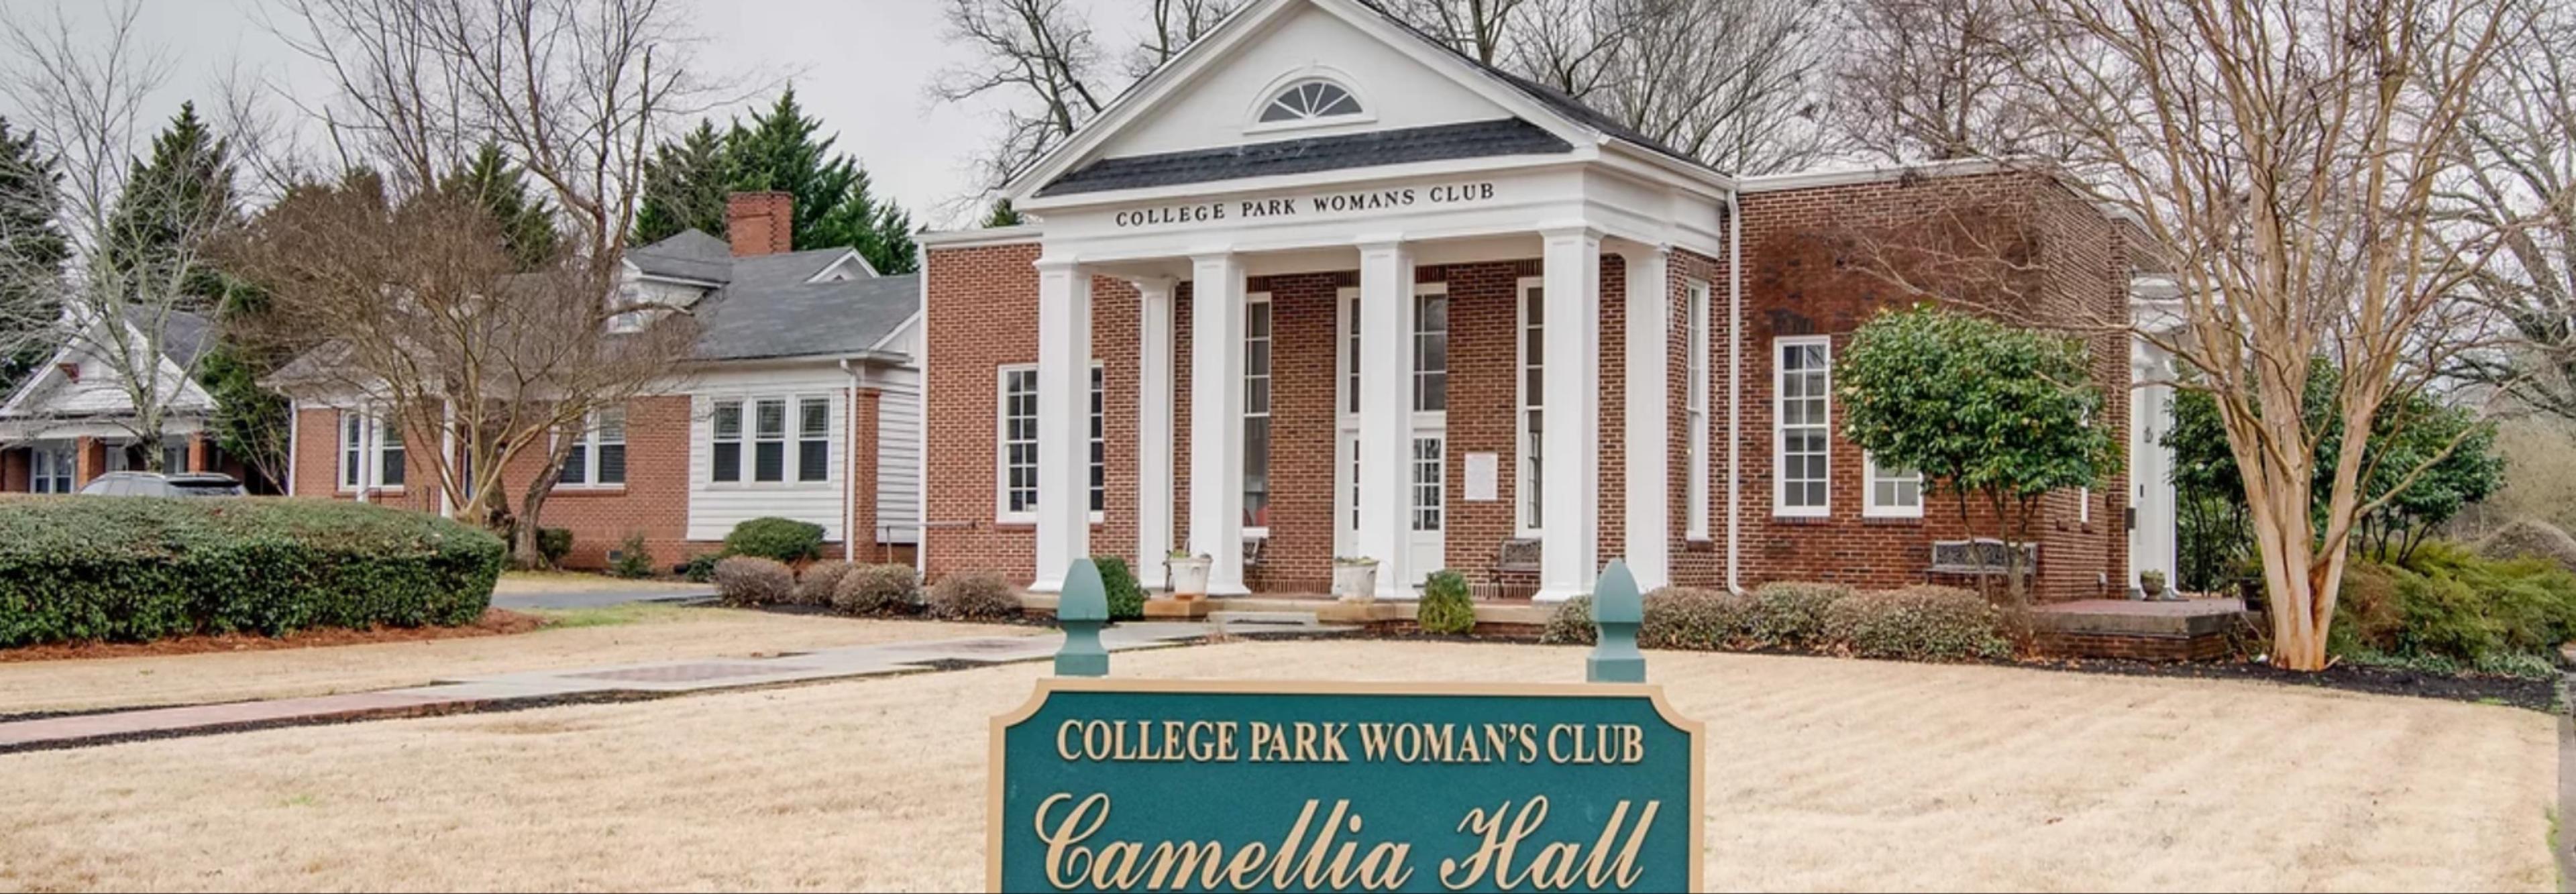 College Park Woman’s Club Camellia Hall